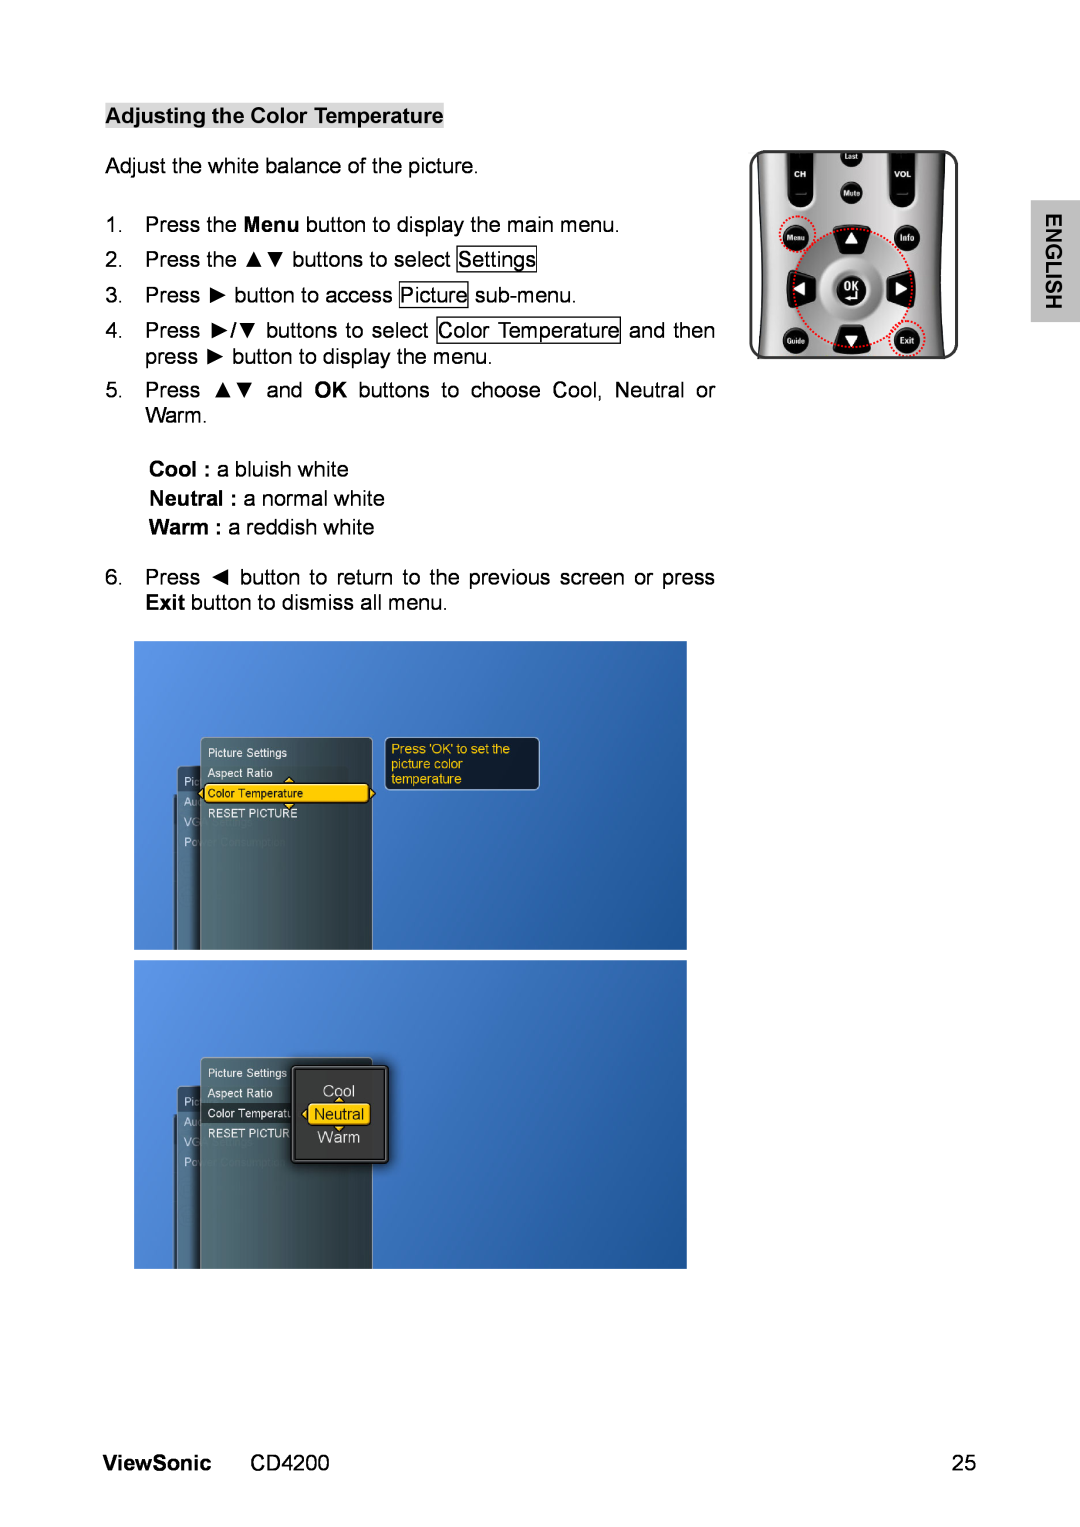 ViewSonic manual Adjusting the Color Temperature, English, ViewSonic CD4200 